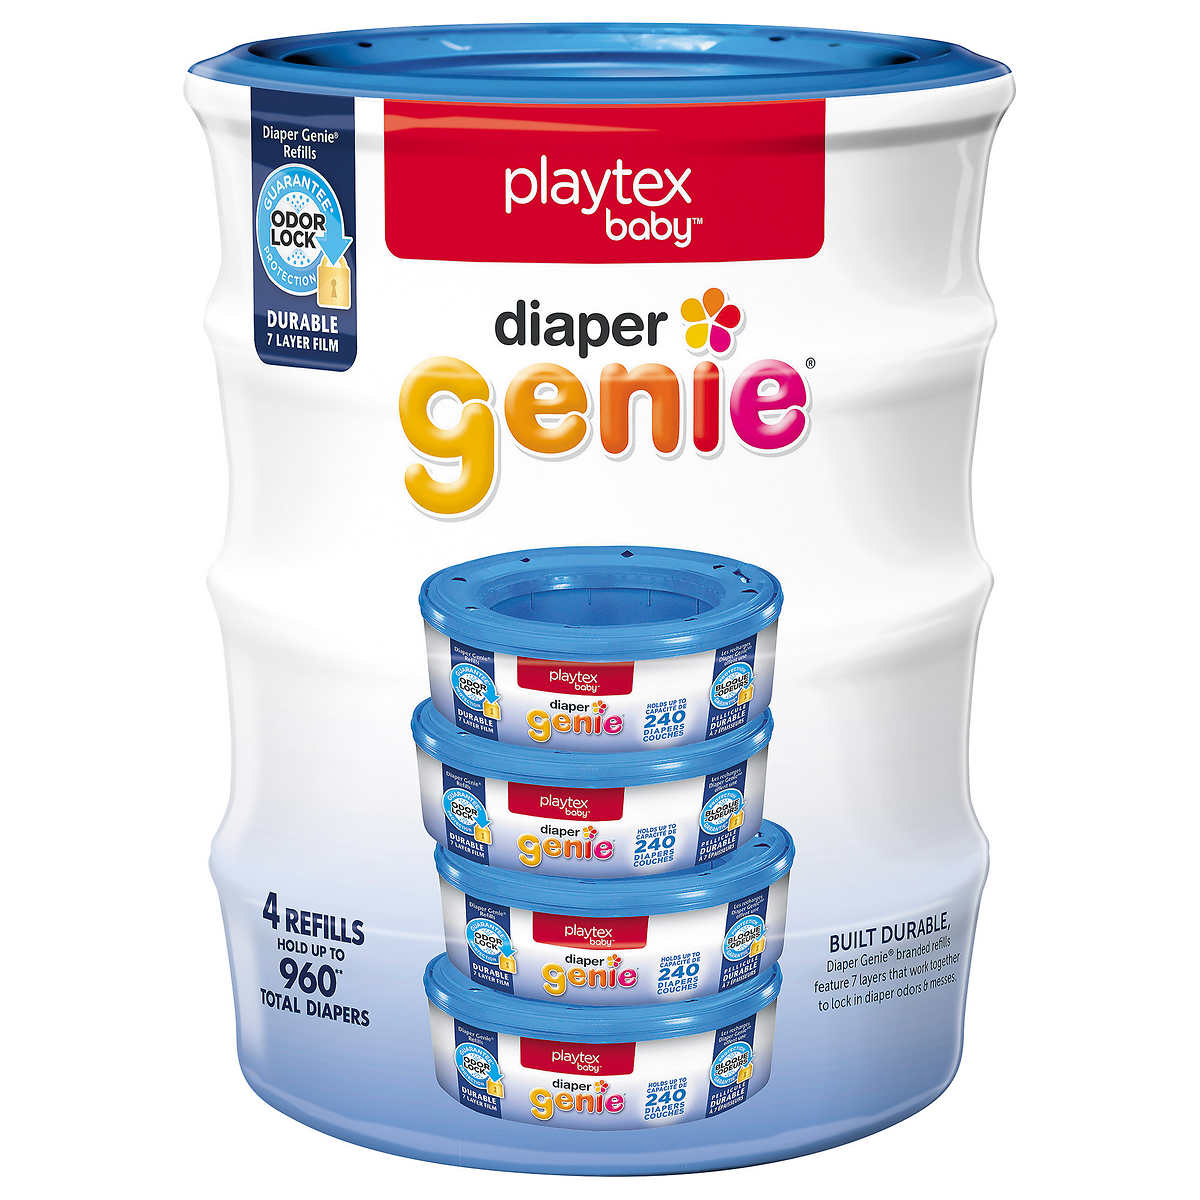 Diaper Genie Refills @ Costco [In Store only] $9.99